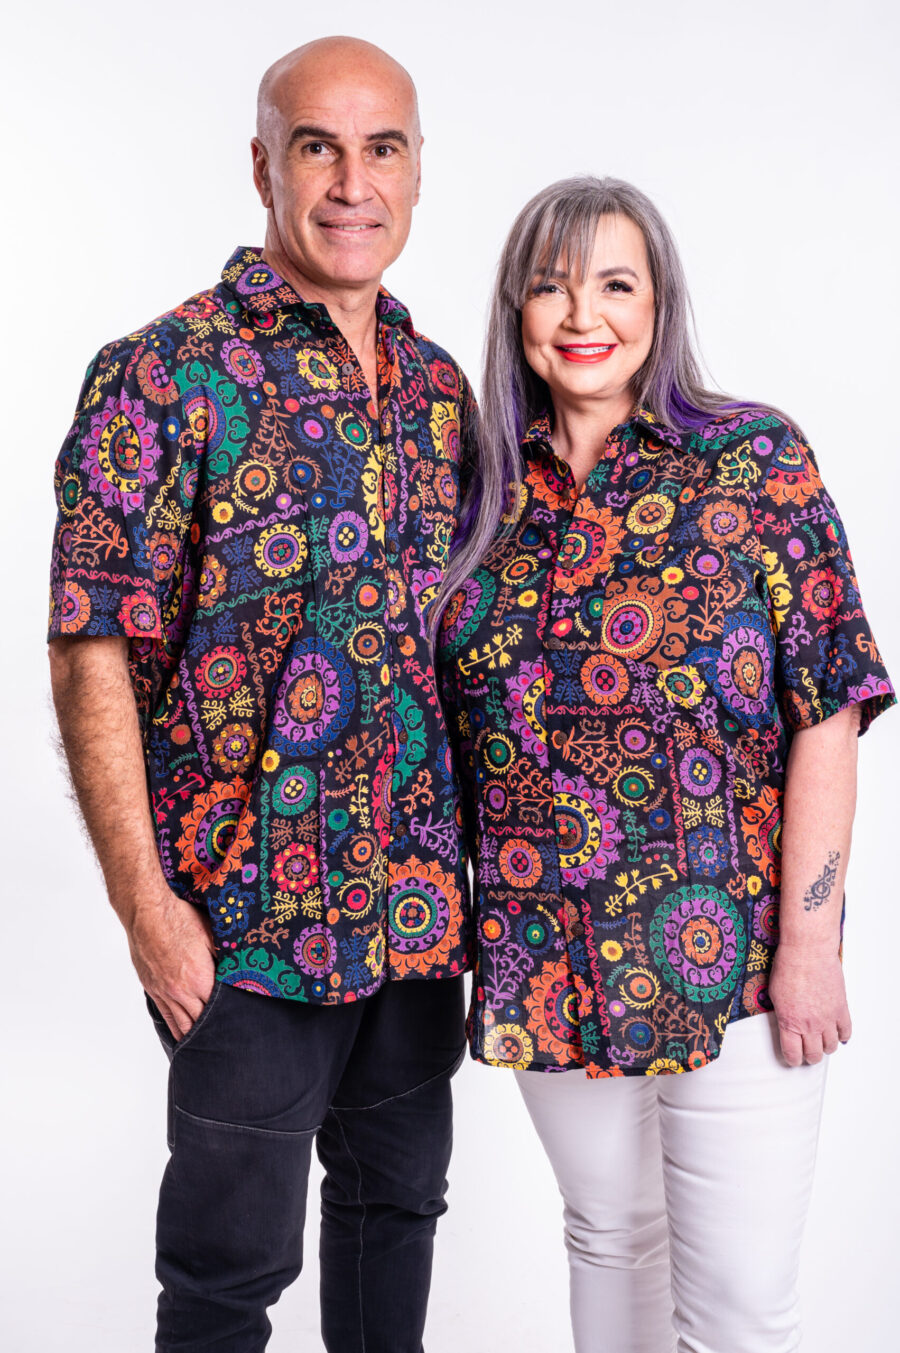 Unisex buttoned shirt for men and women | A Black buttoned shirt with colorful mandalas print - a unique design